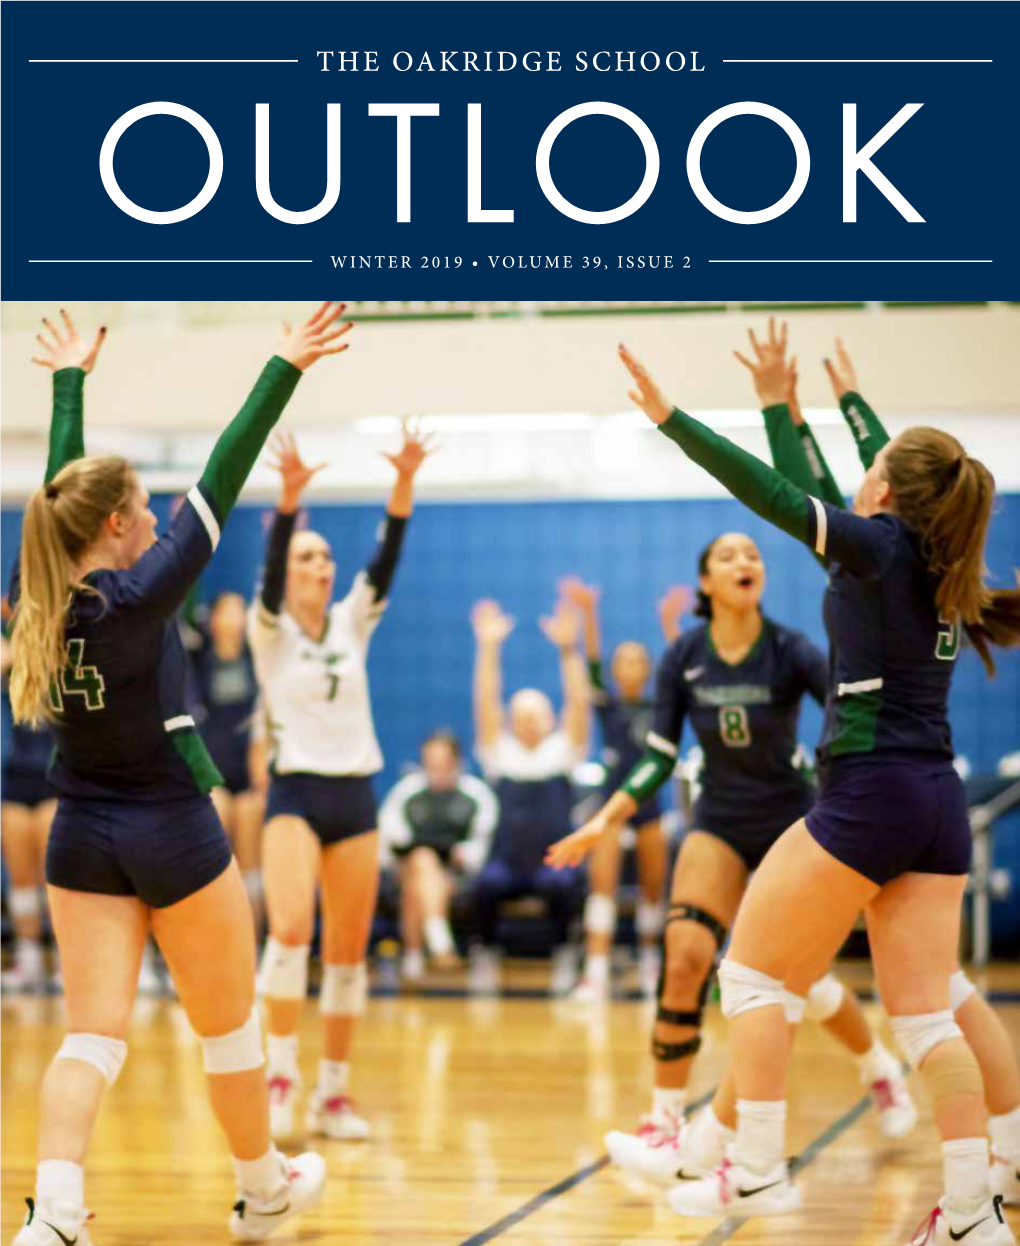 The Oakridge School Outlook Winter 2019 • Volume 39, Issue 2 Features